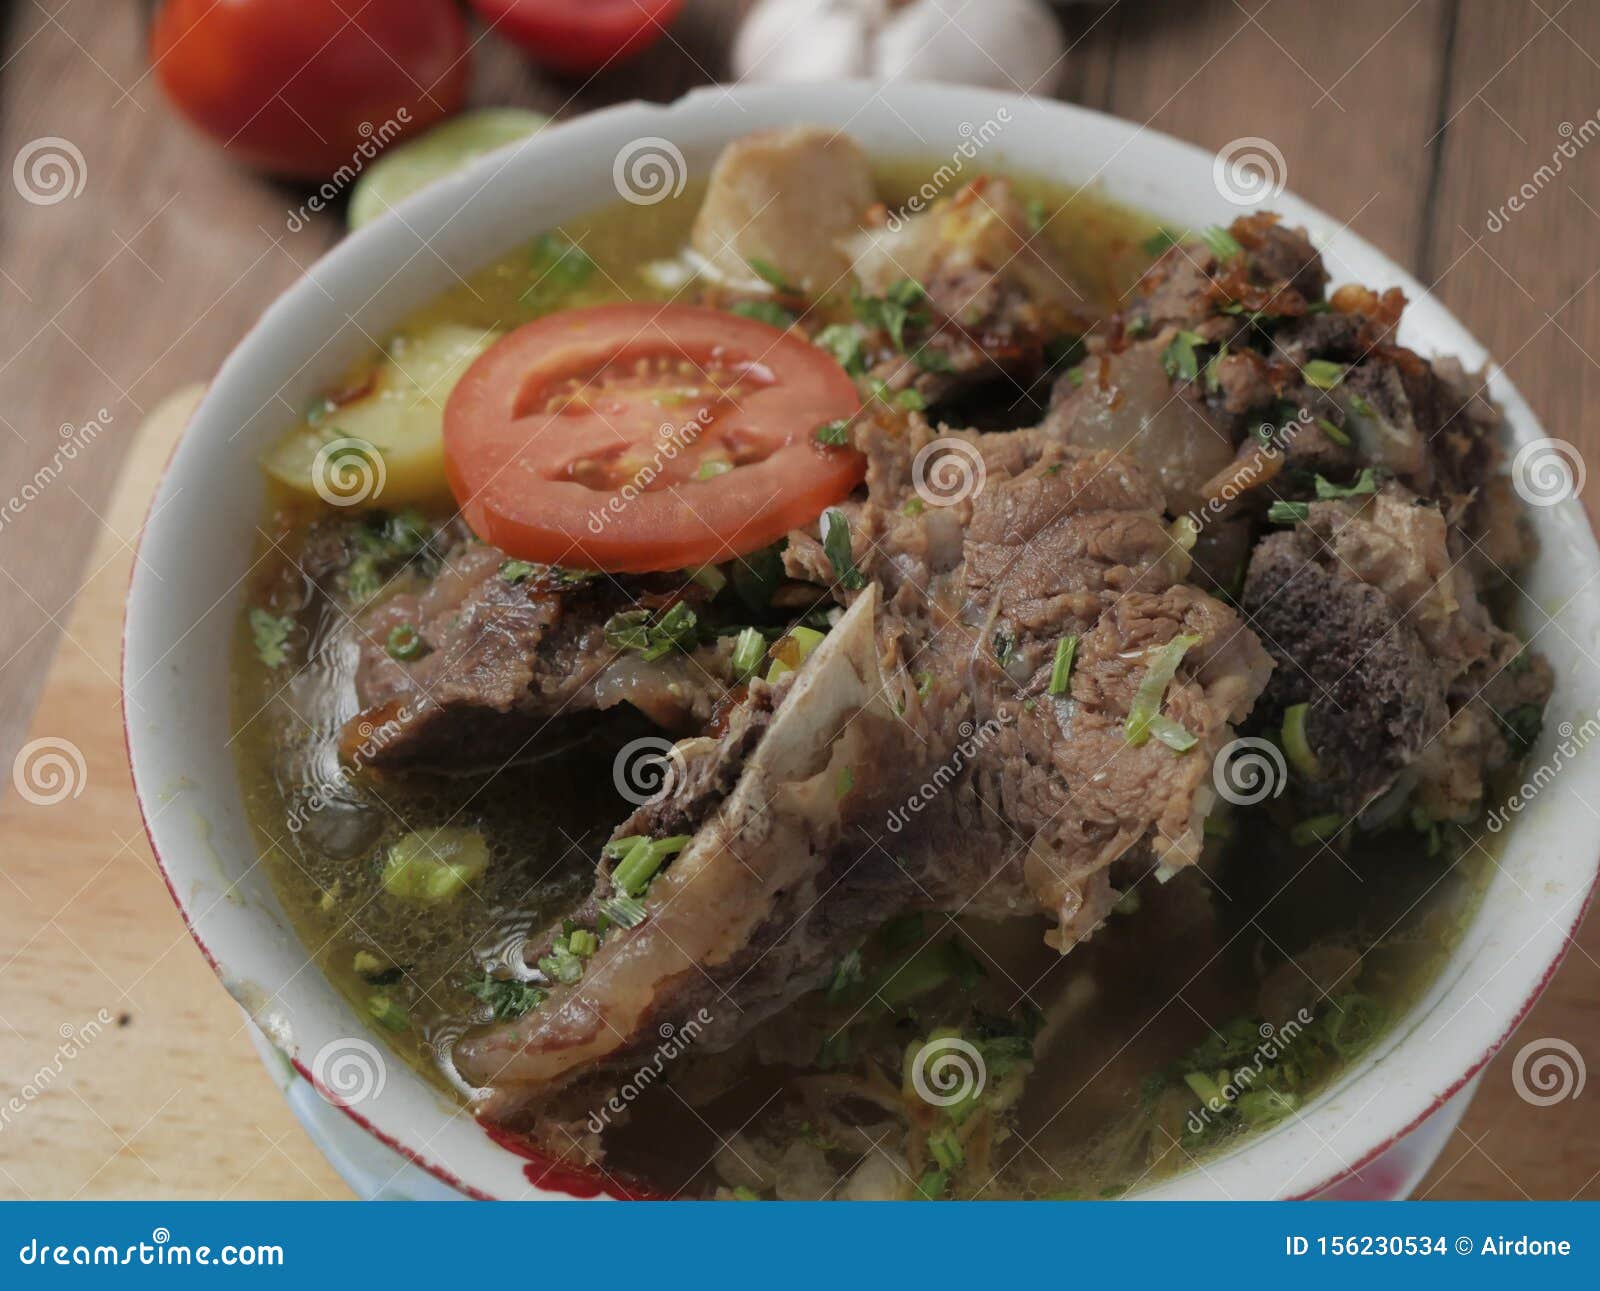 sop buntut or sop tulang sapi, indonesian oxtail soup